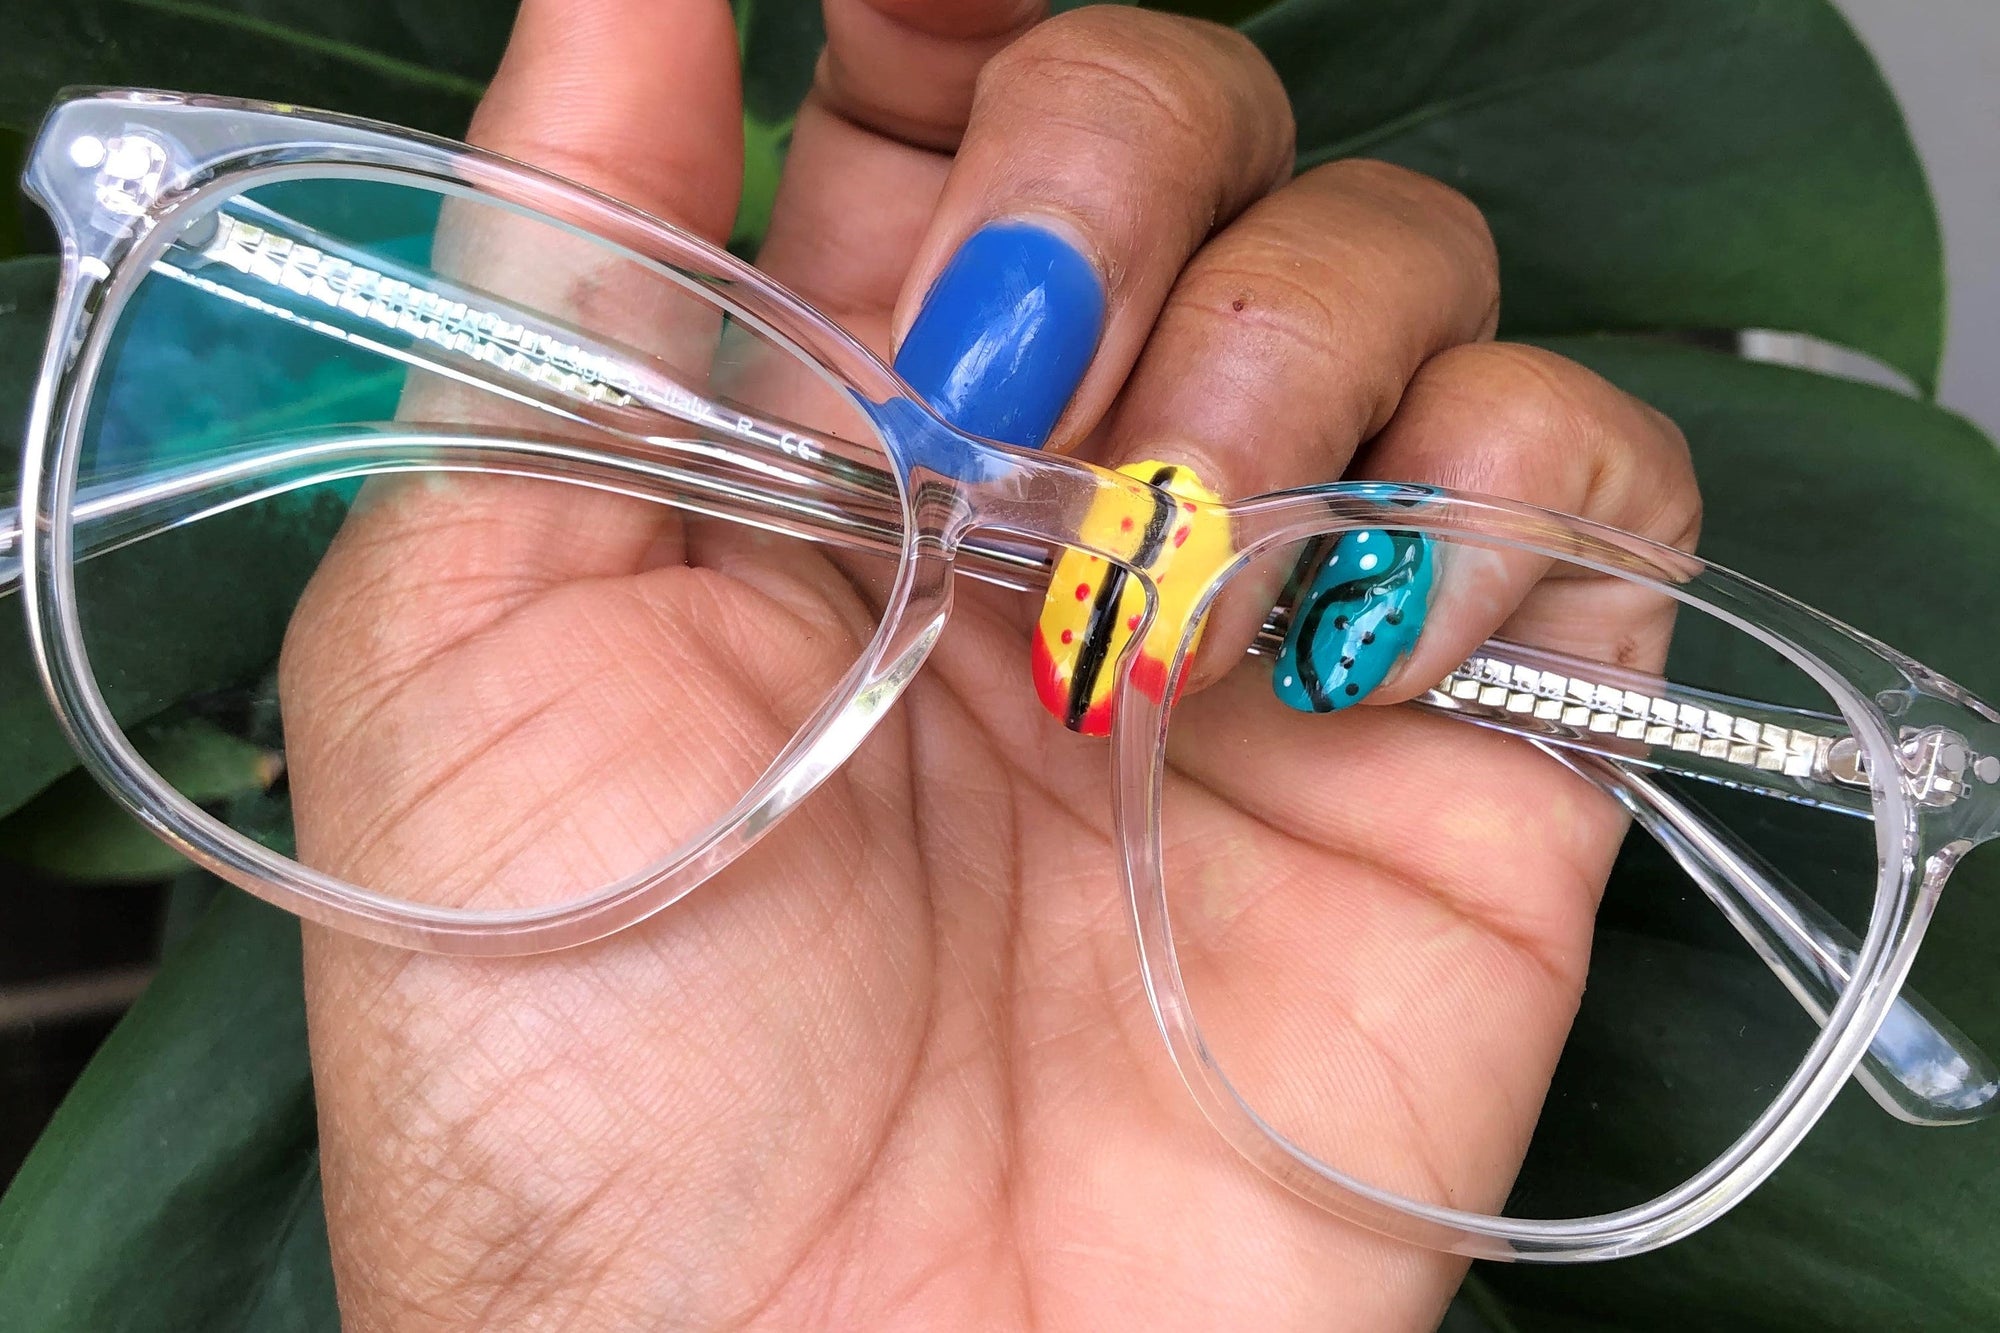 Do You Need Blue Light Glasses For Tv? | KOALAEYE OPTICAL